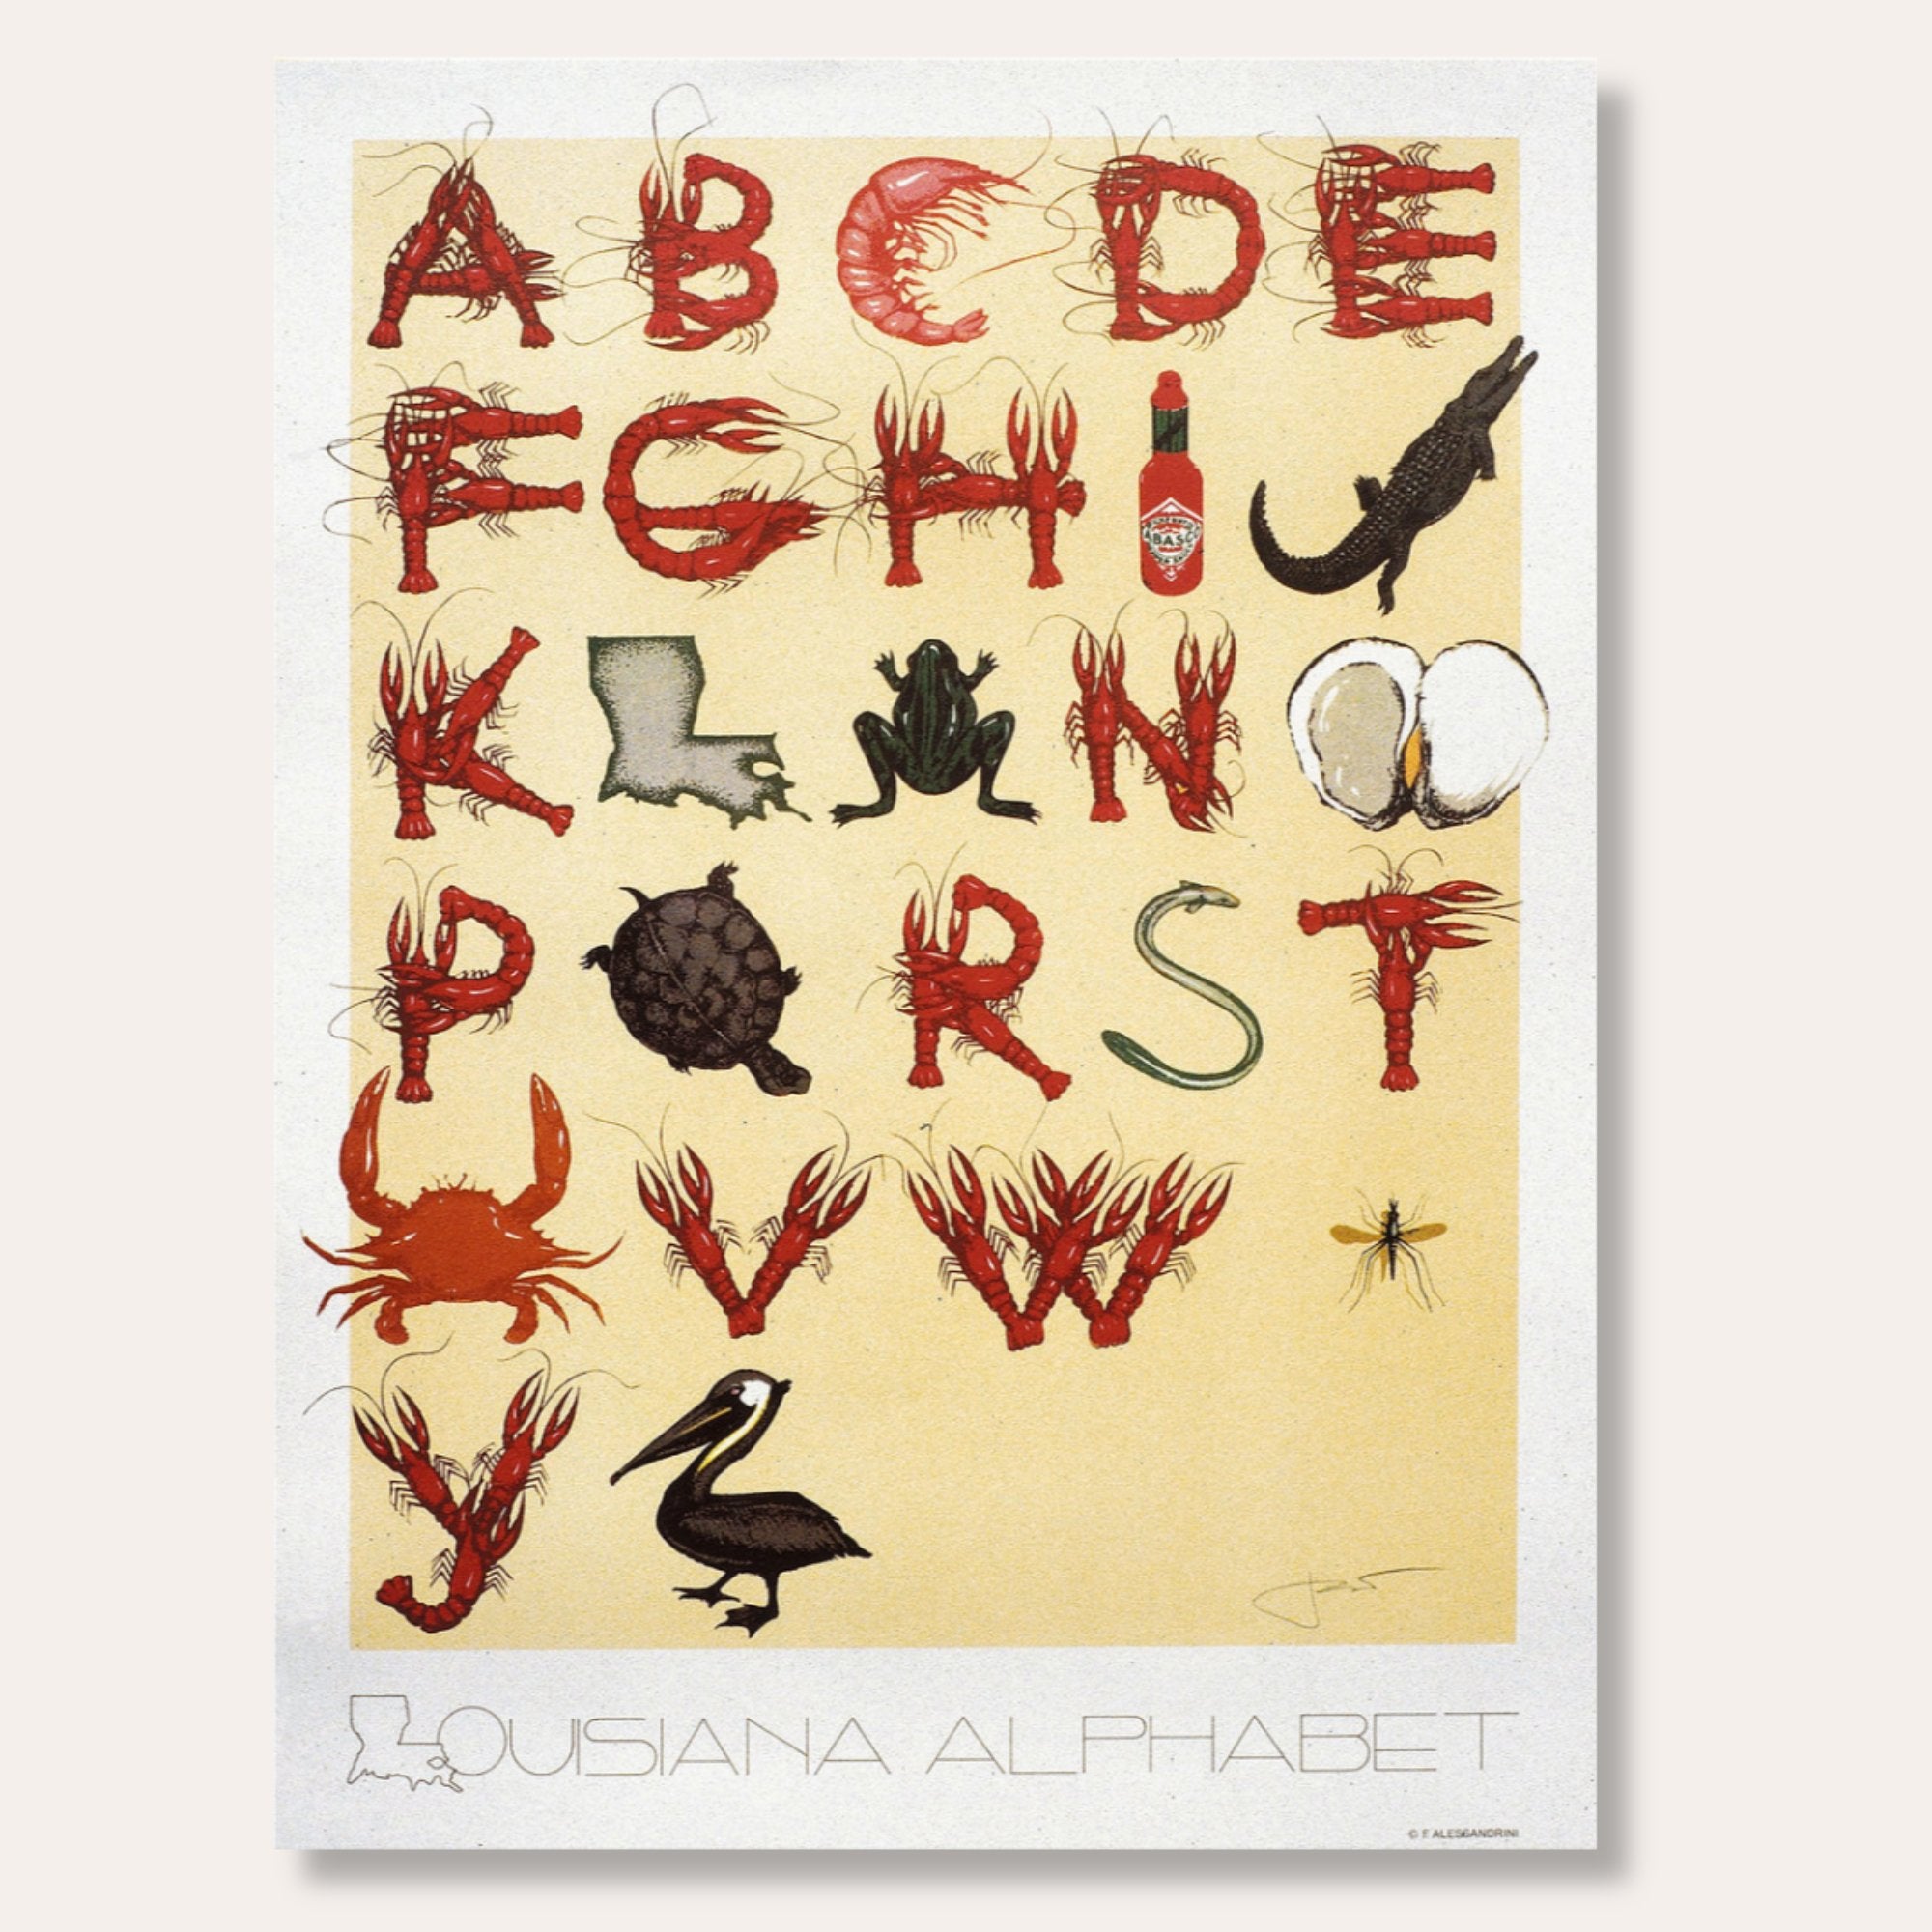 Louisiana Alphabet Print - Dirty Coast